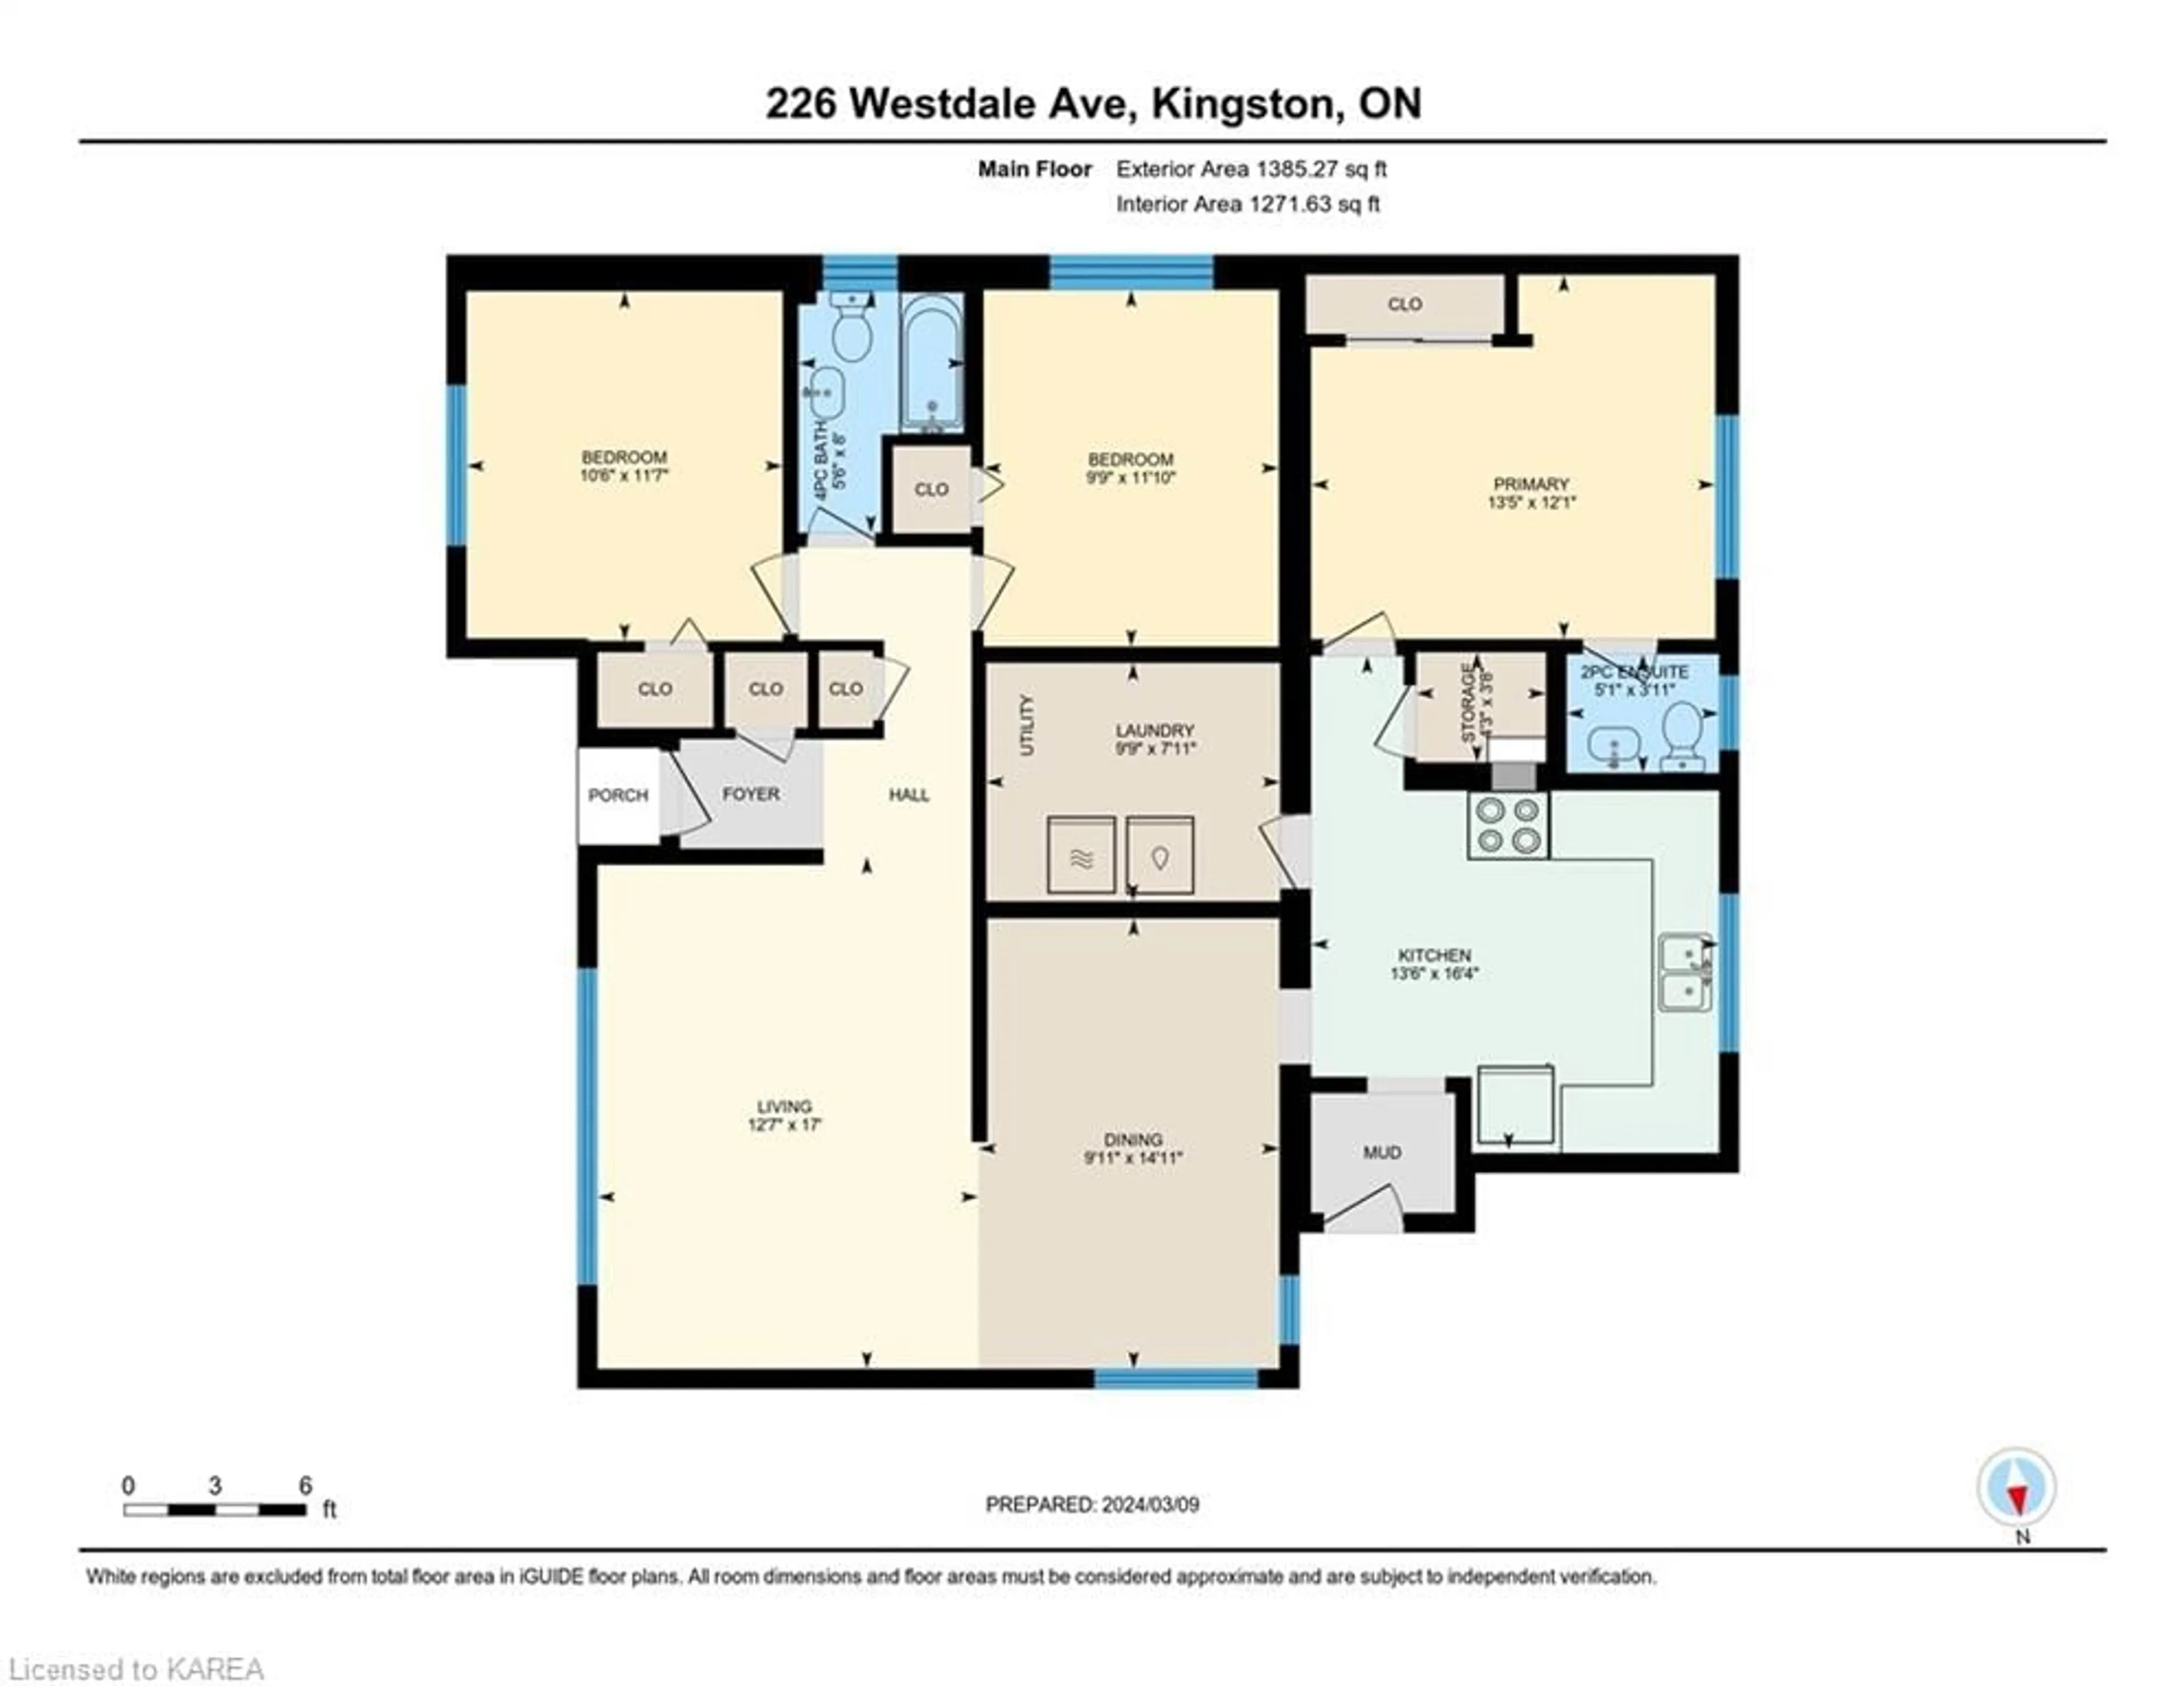 Floor plan for 226 Westdale Ave, Kingston Ontario K7L 4S5